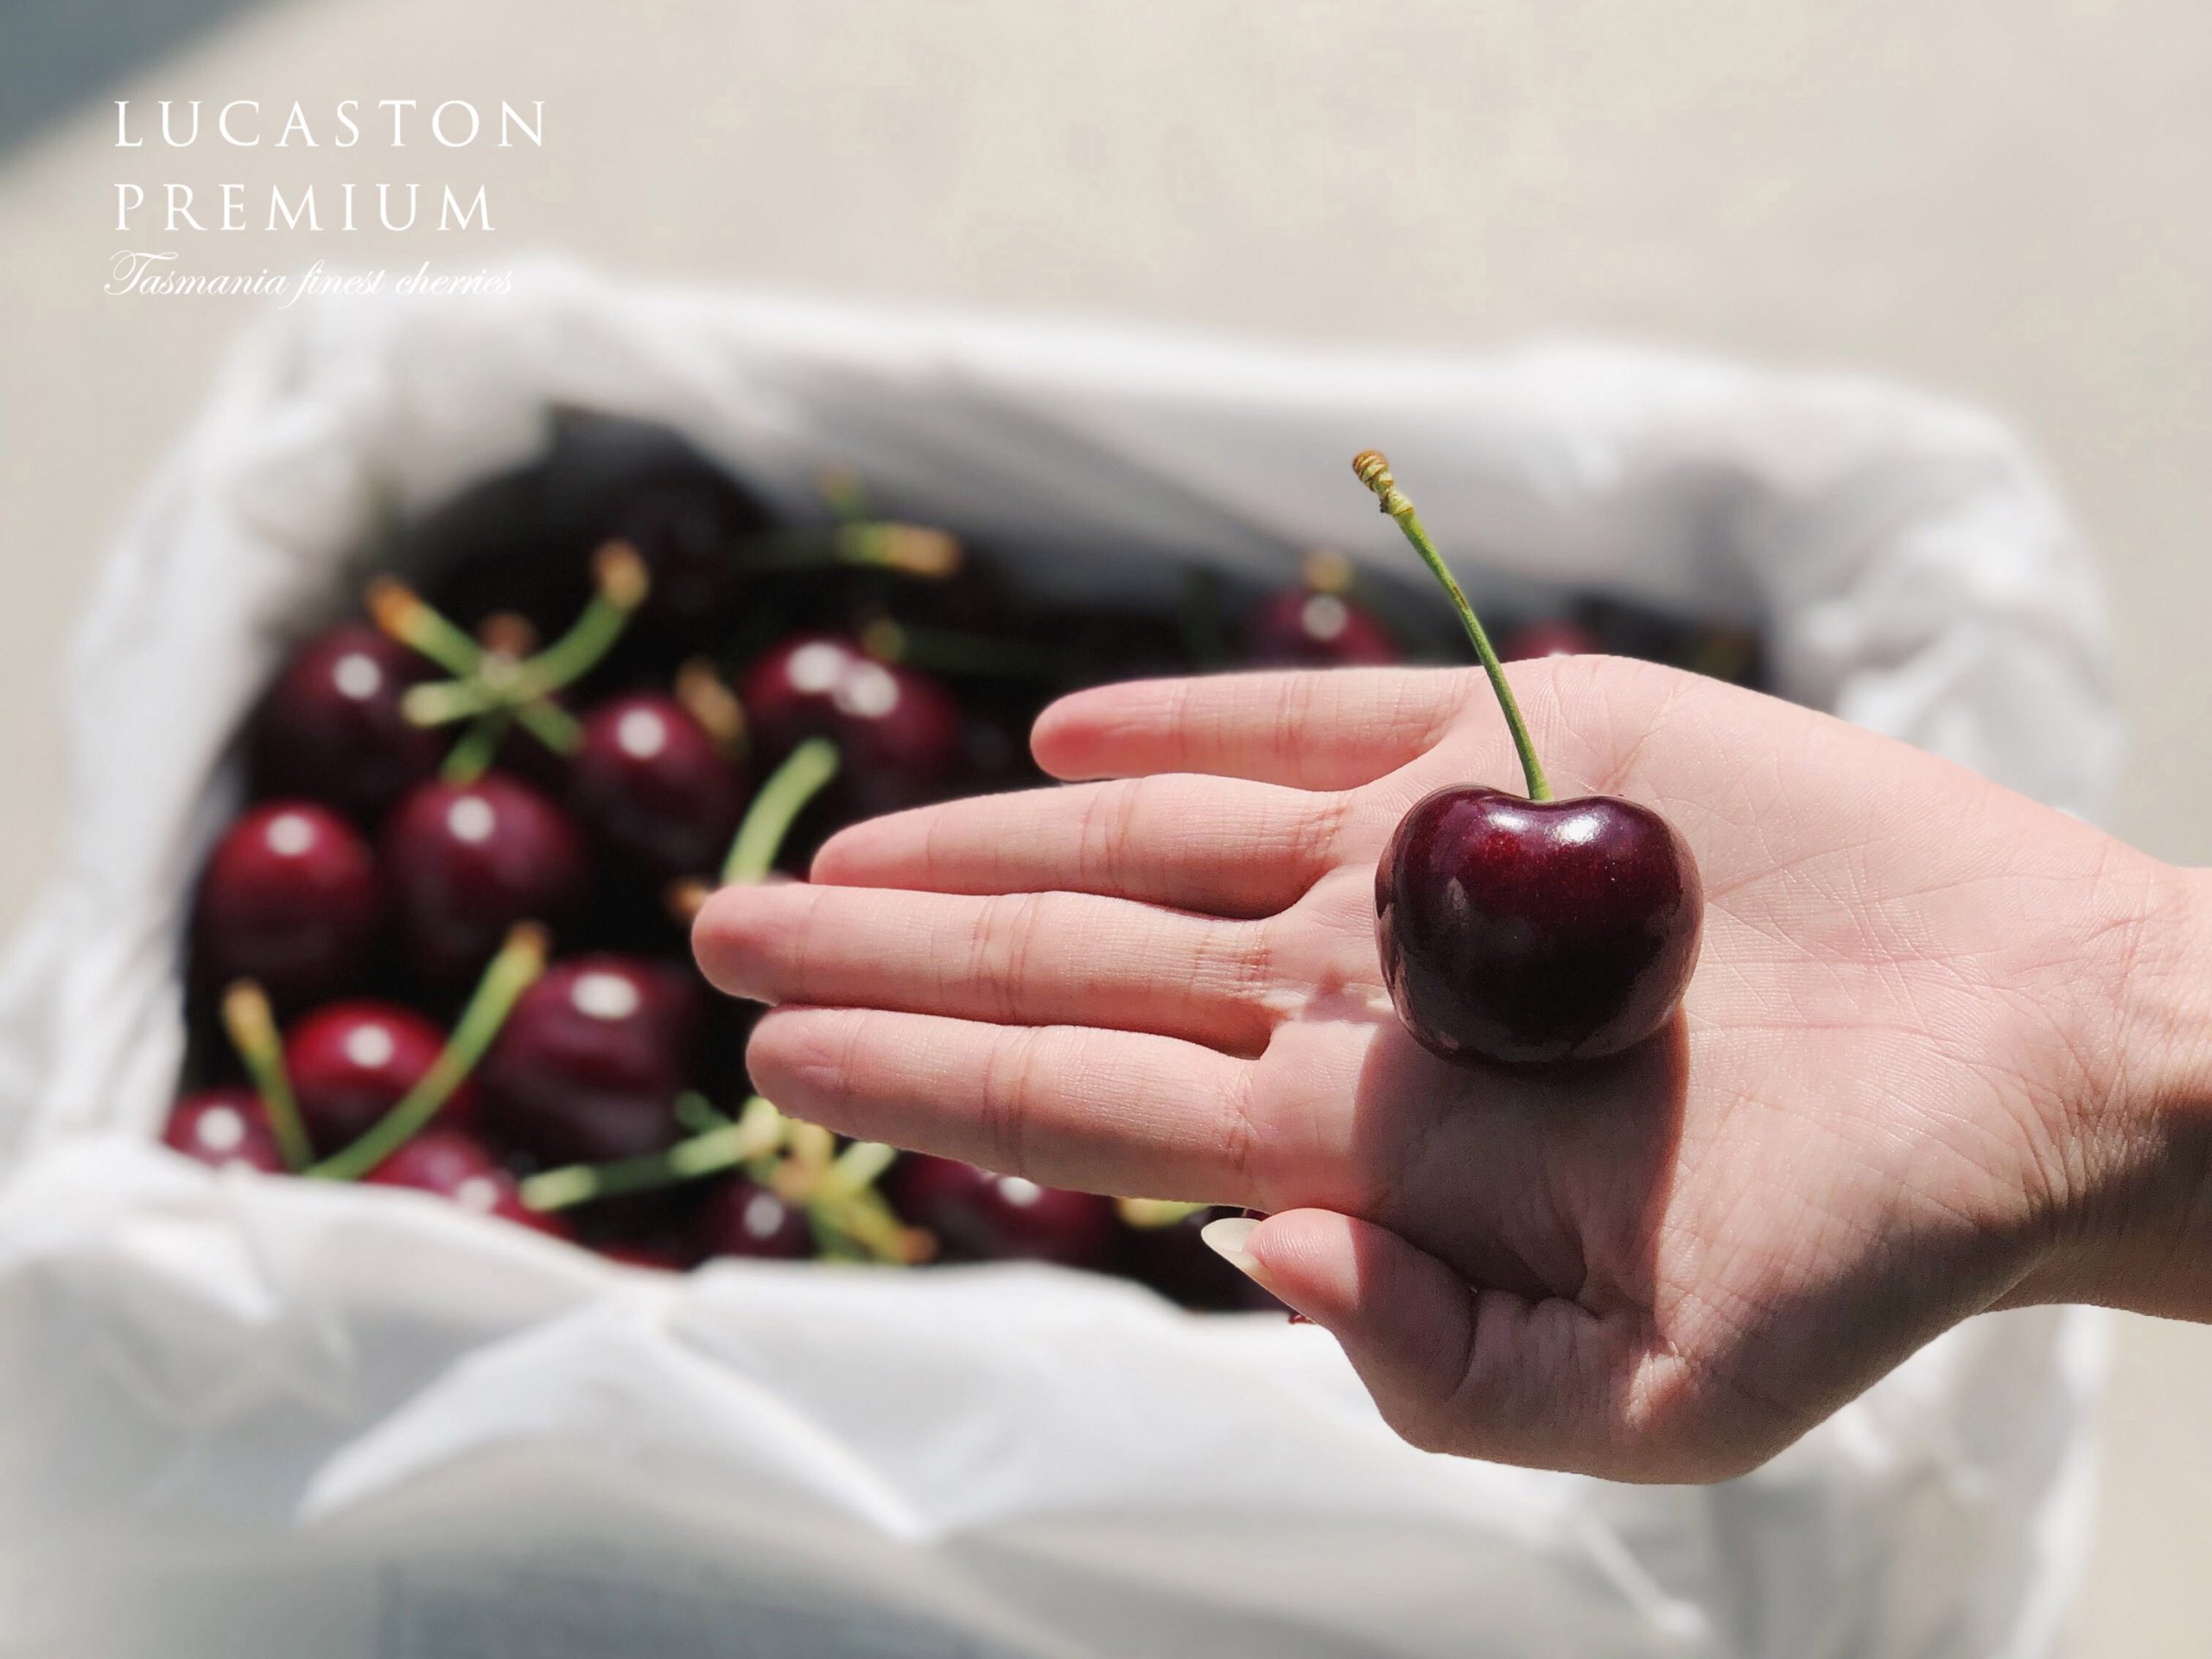 Lucaston Premium伊嚐精品櫻桃。年度限量預購中｜櫻桃愛好者味蕾的世界之頂